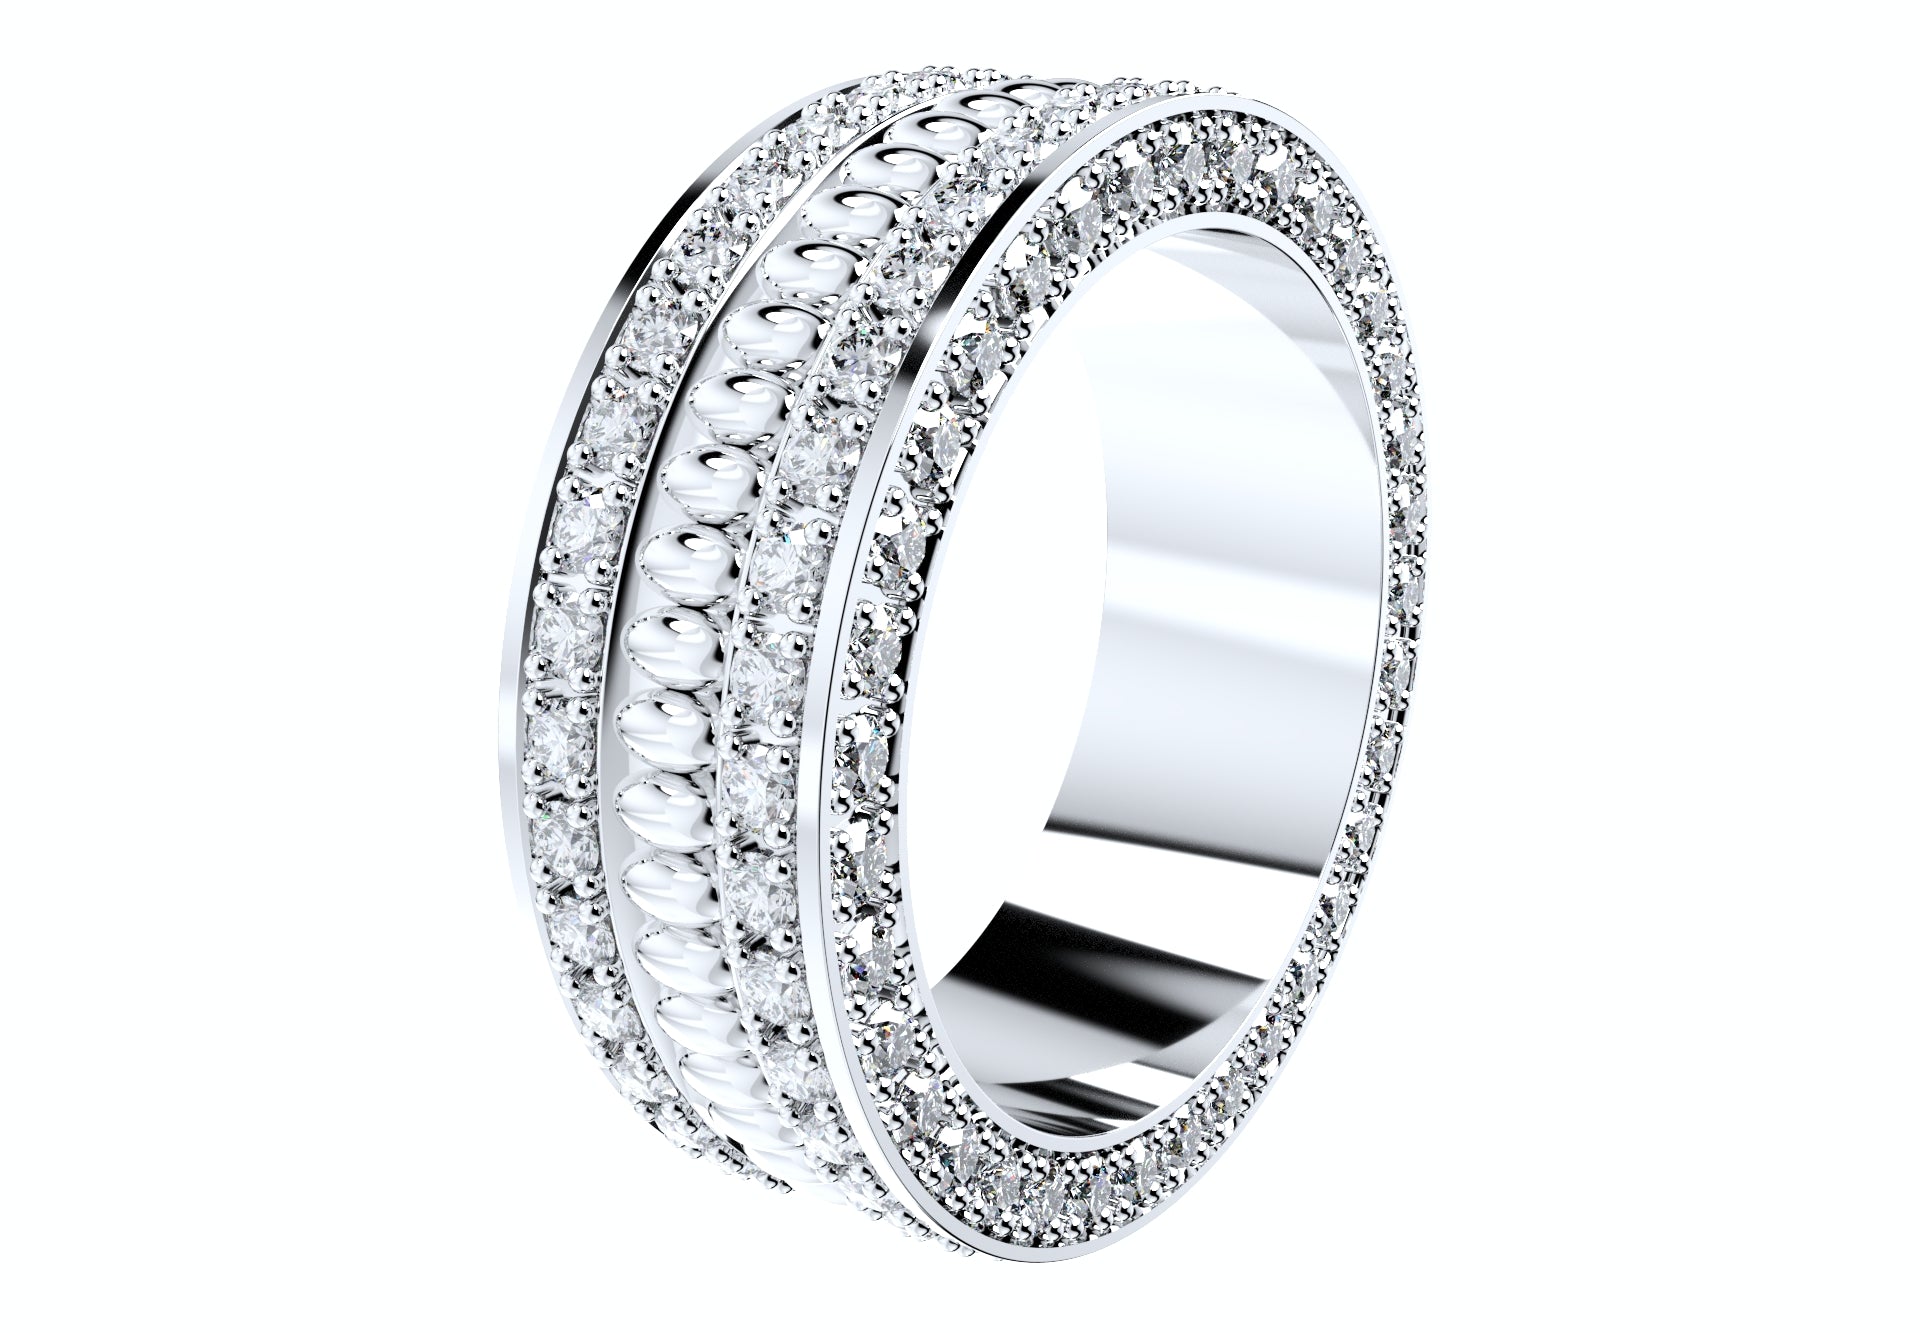 Wedding Set Ring Women Men Ring CAD Design-PSJM001V10